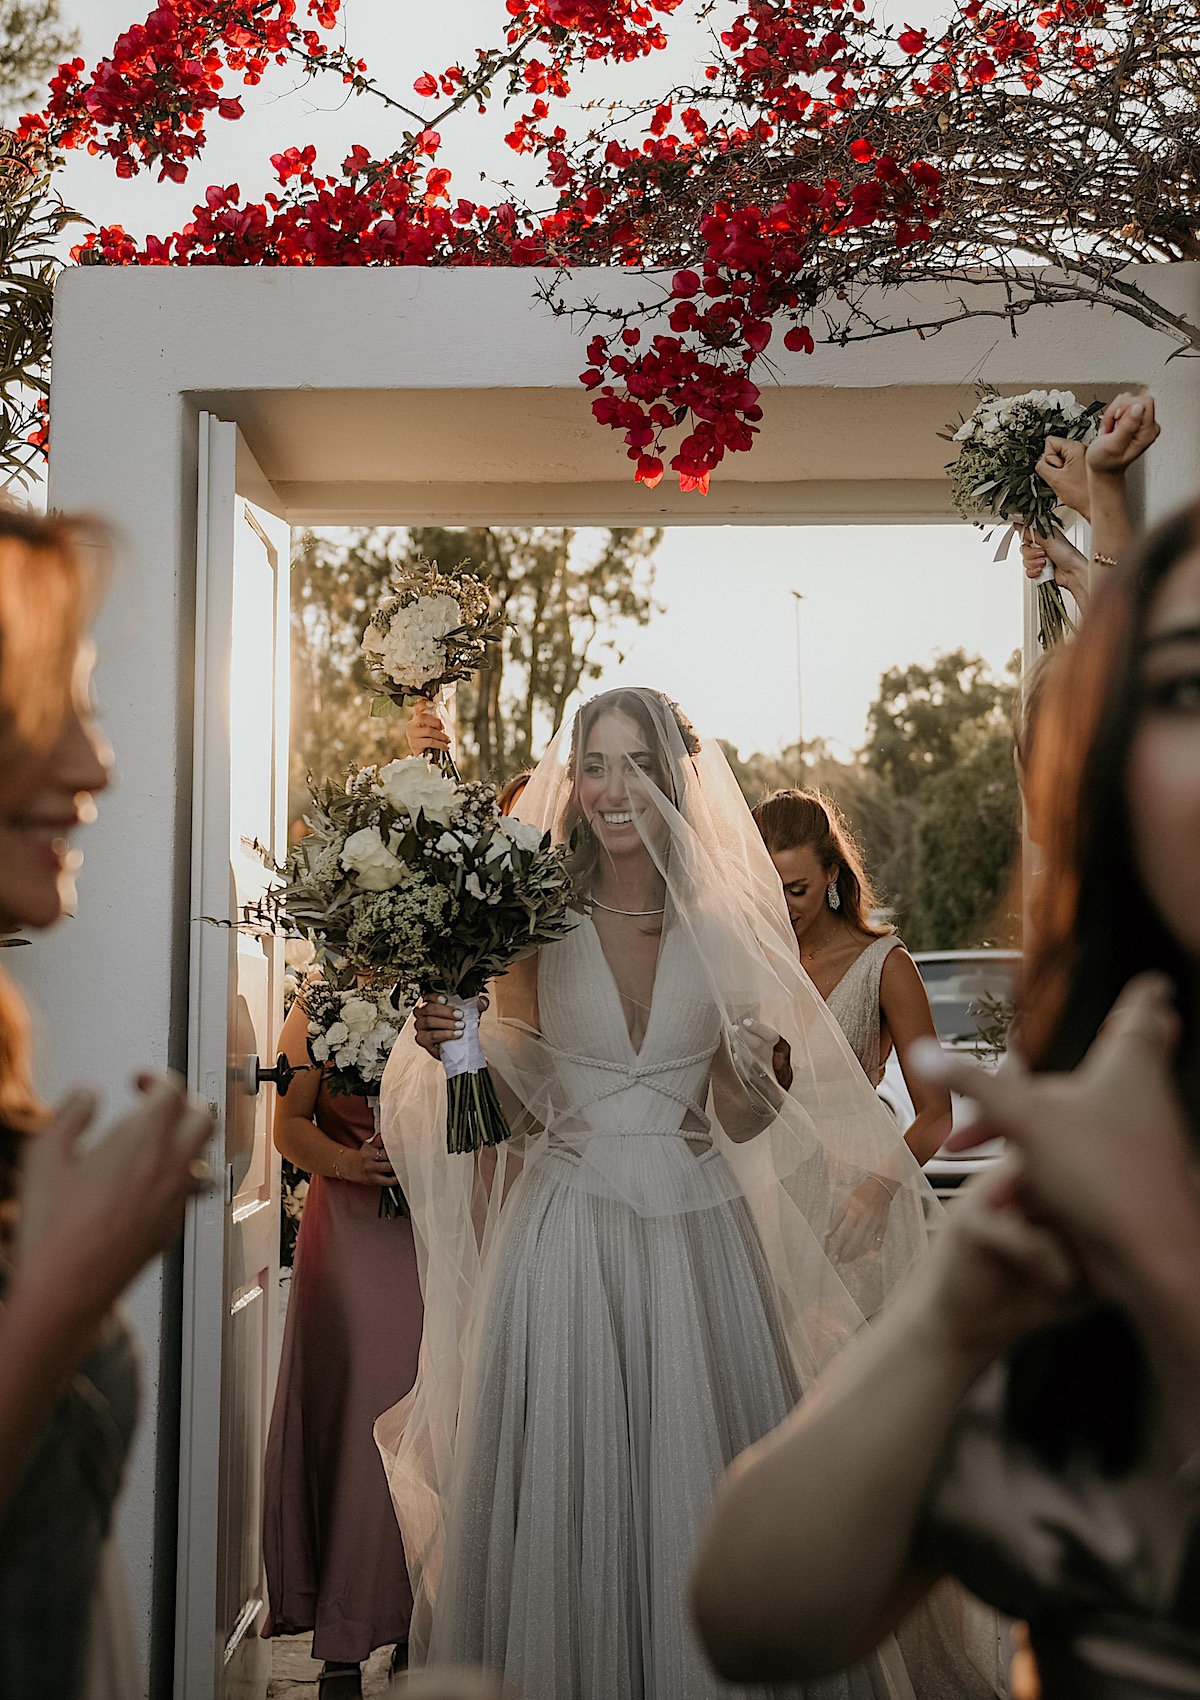 Dreamy ethereal wedding dress for bohemian bride in Greece